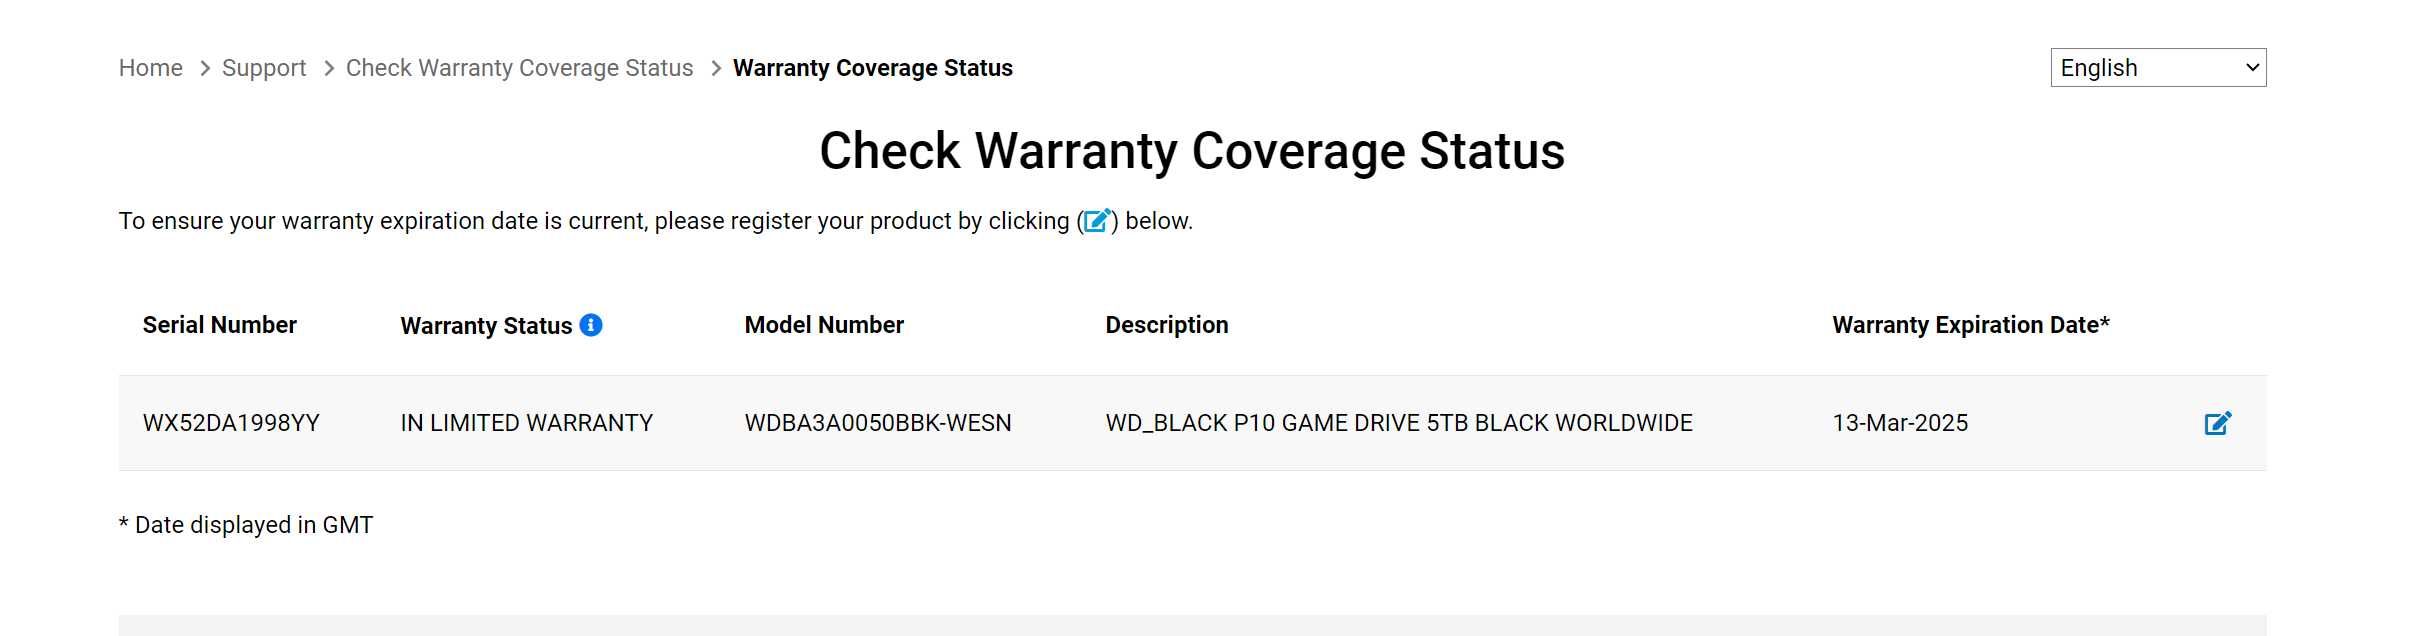 WD BLACK P10 GAME DRIVE 5TB - nowy/gwarancja